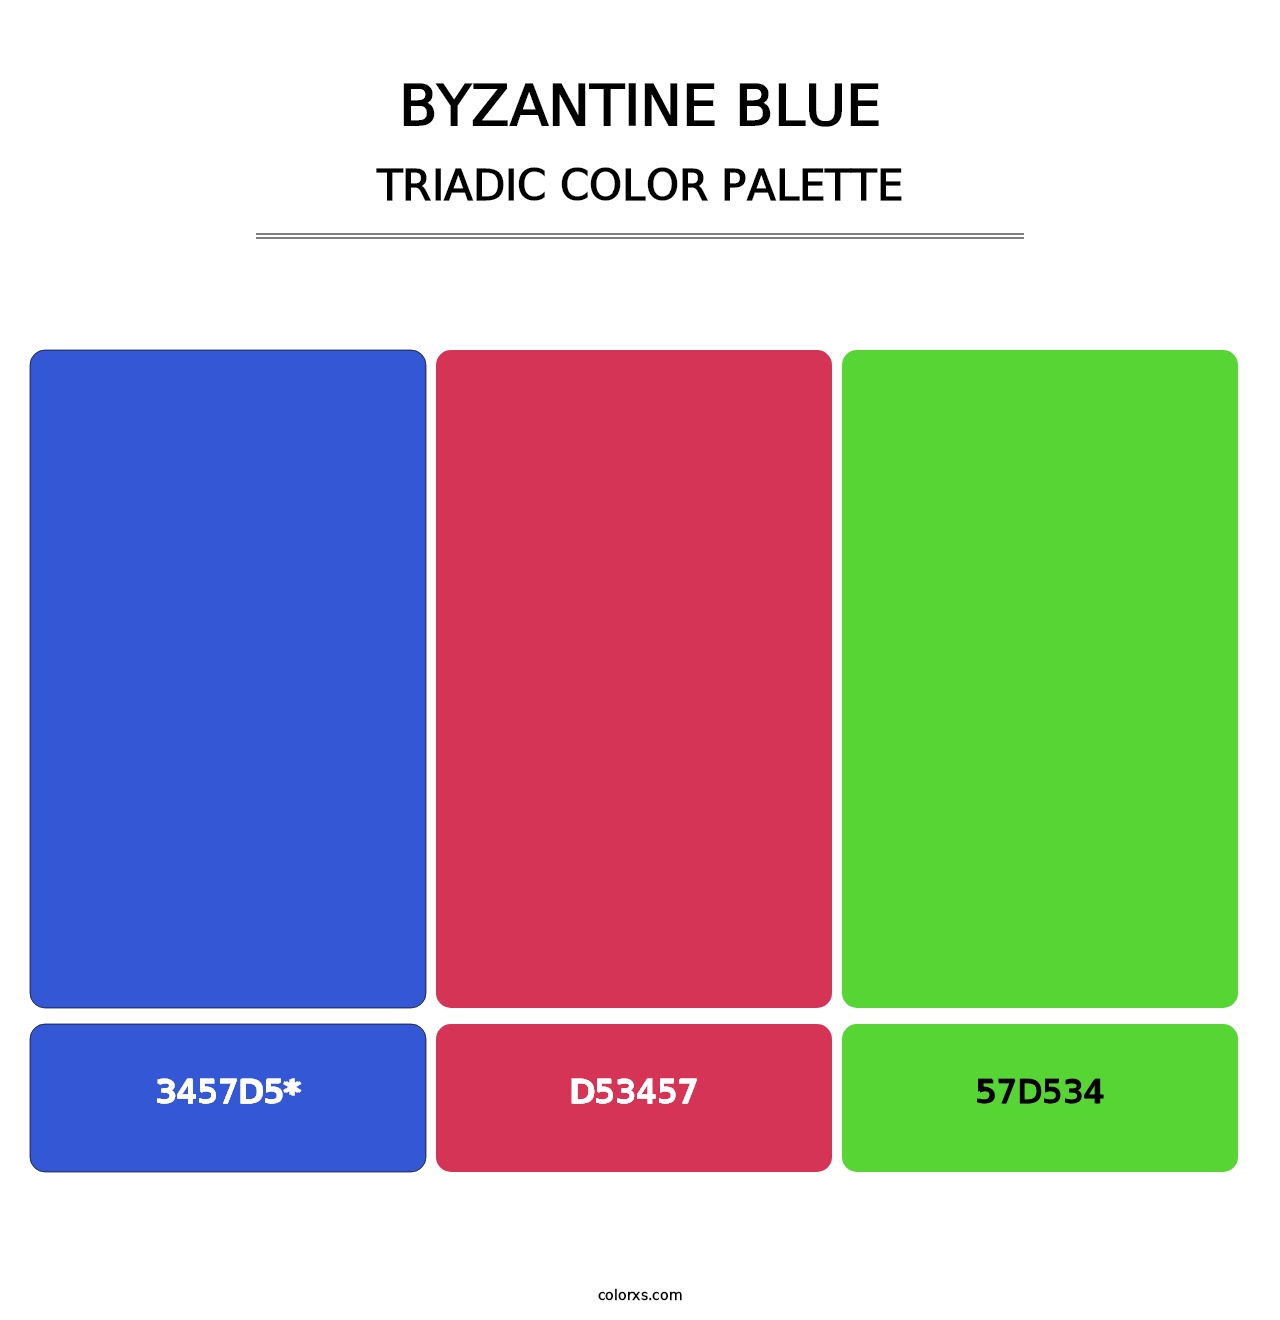 Byzantine Blue - Triadic Color Palette